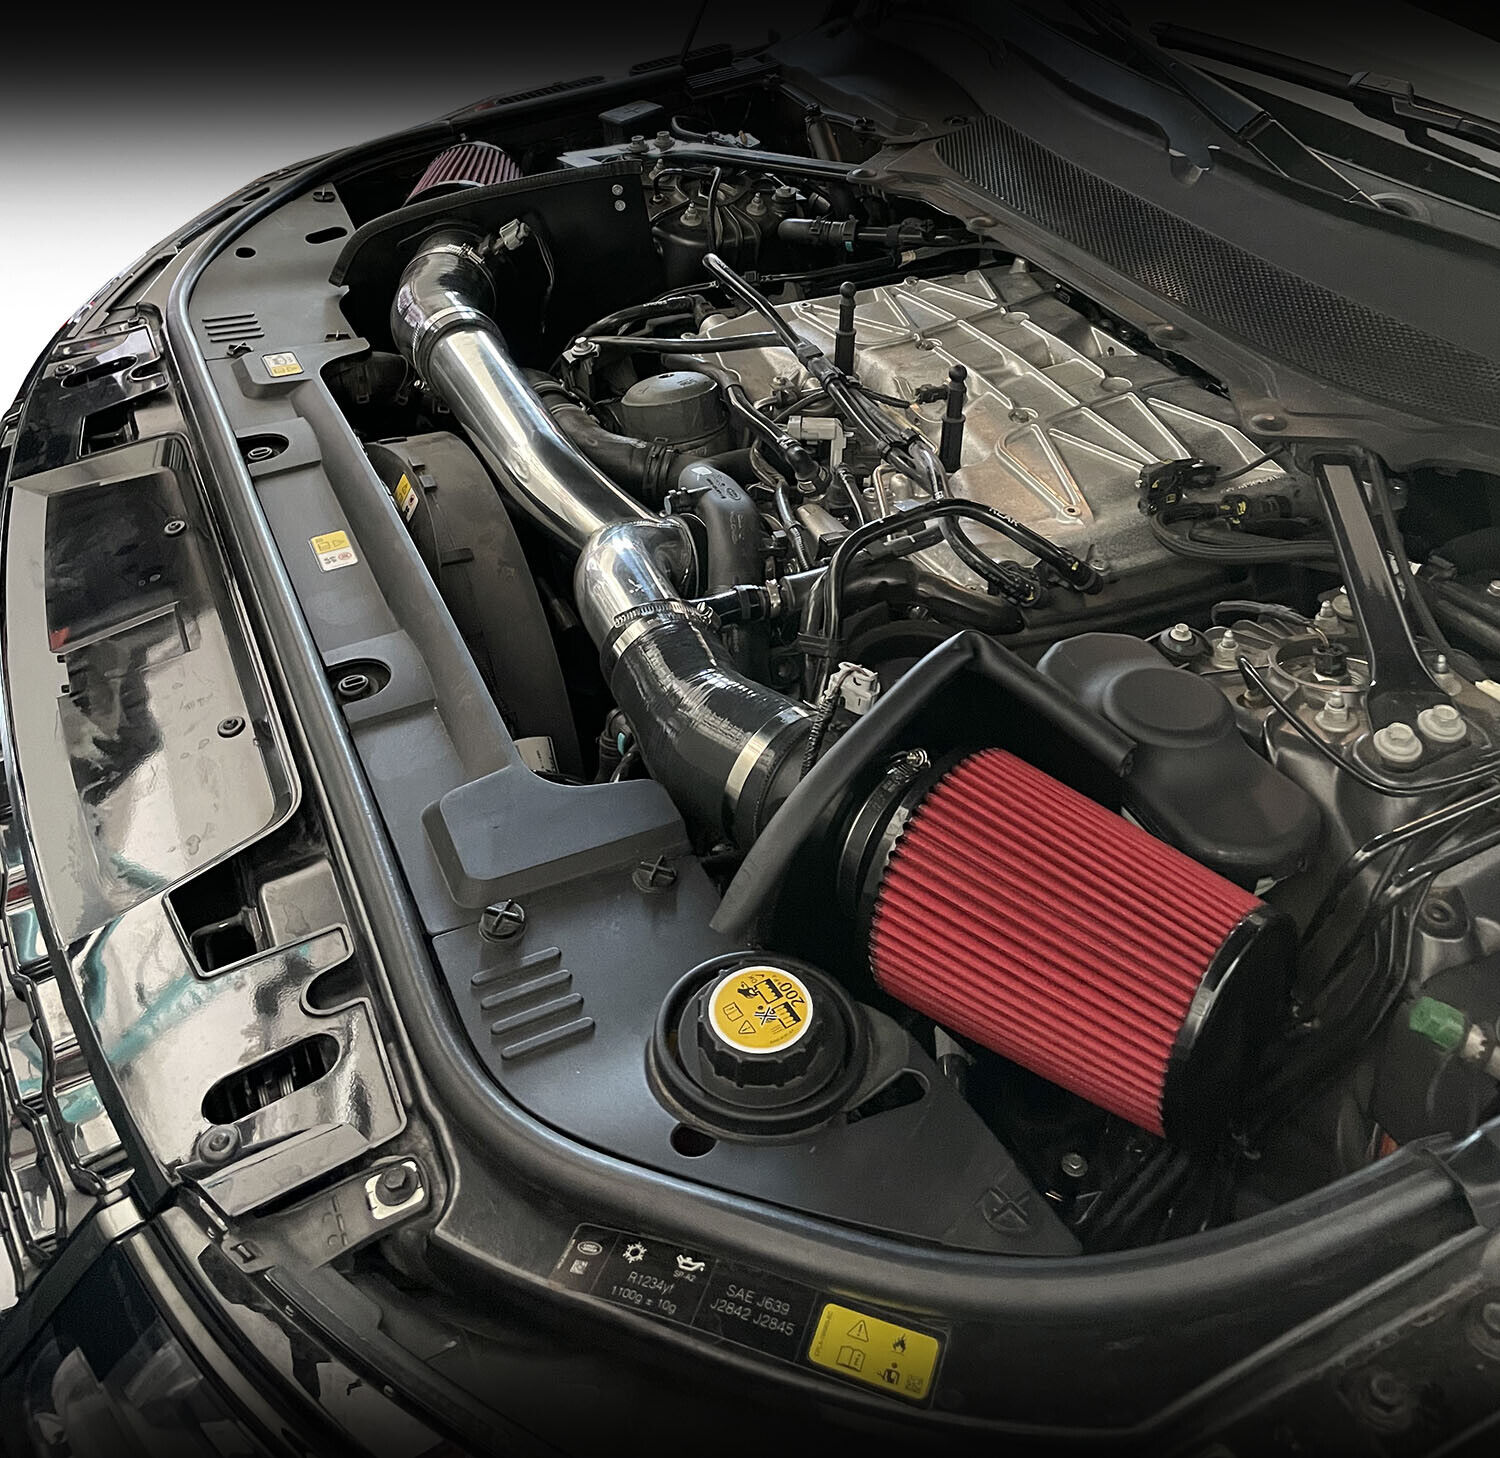 Range Rover Sport V8 5.0 Supercharged Performance Air Intake Filter Kit 2010-13